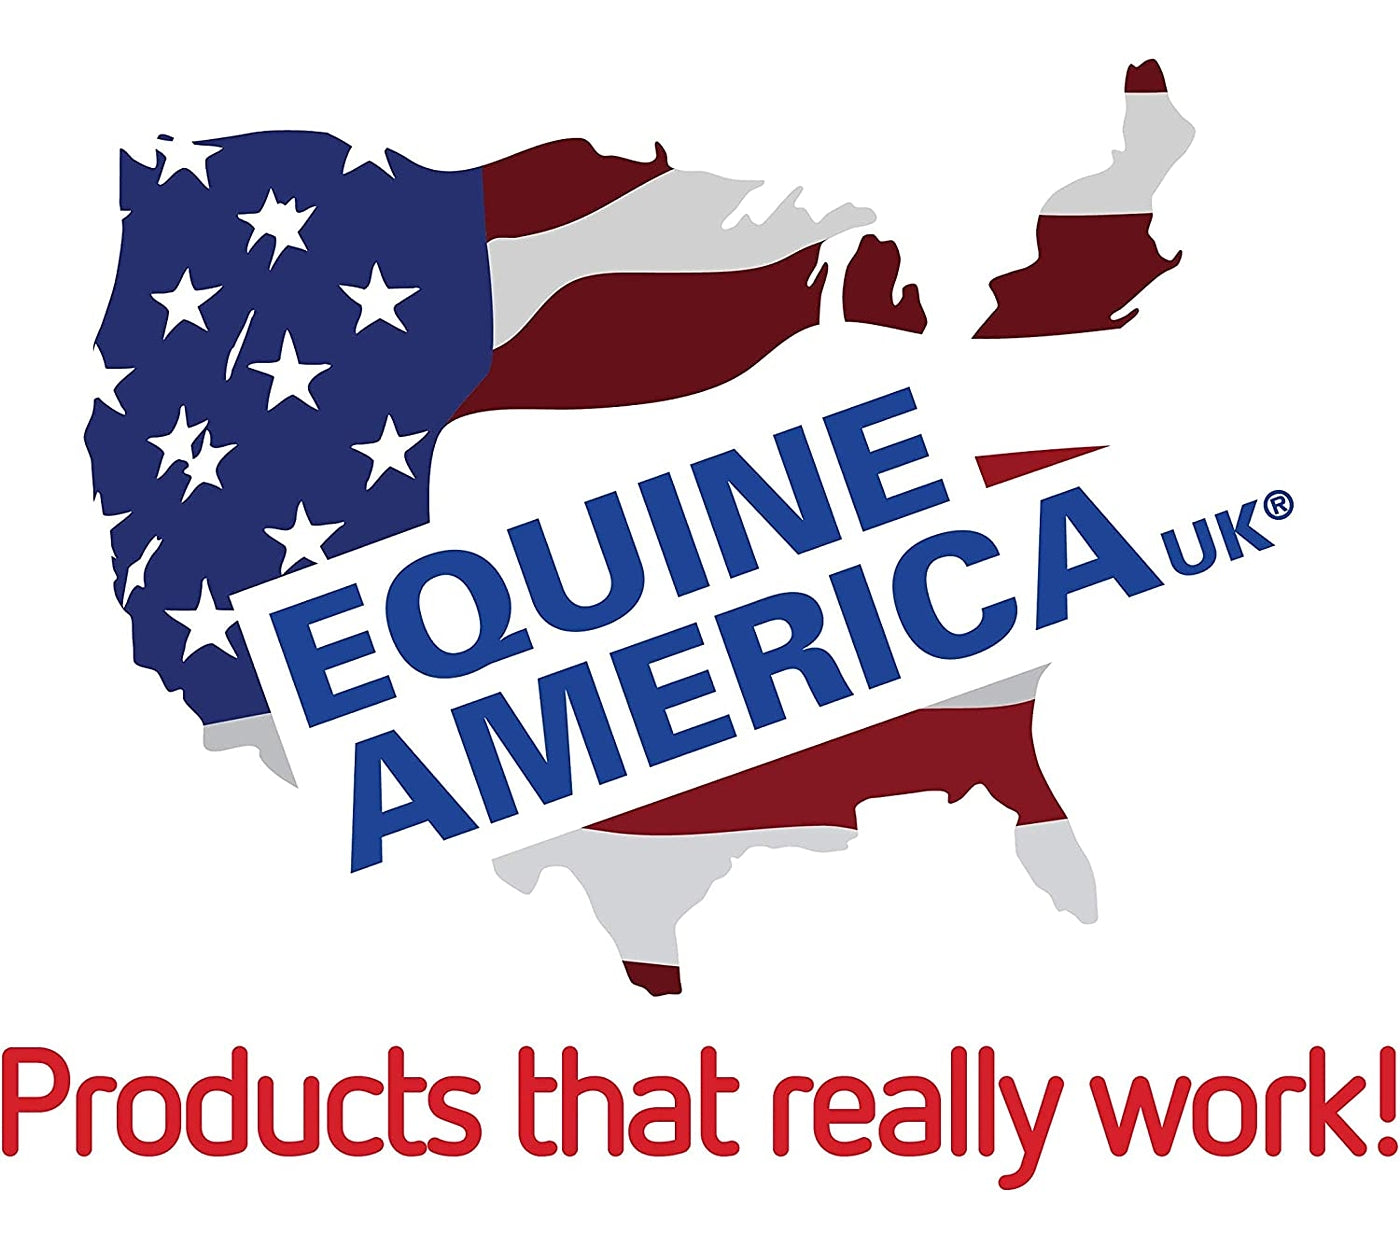 Equine America Cortaflex® HA Regular Strength Solution 1L - Buy Online SPR Centre UK